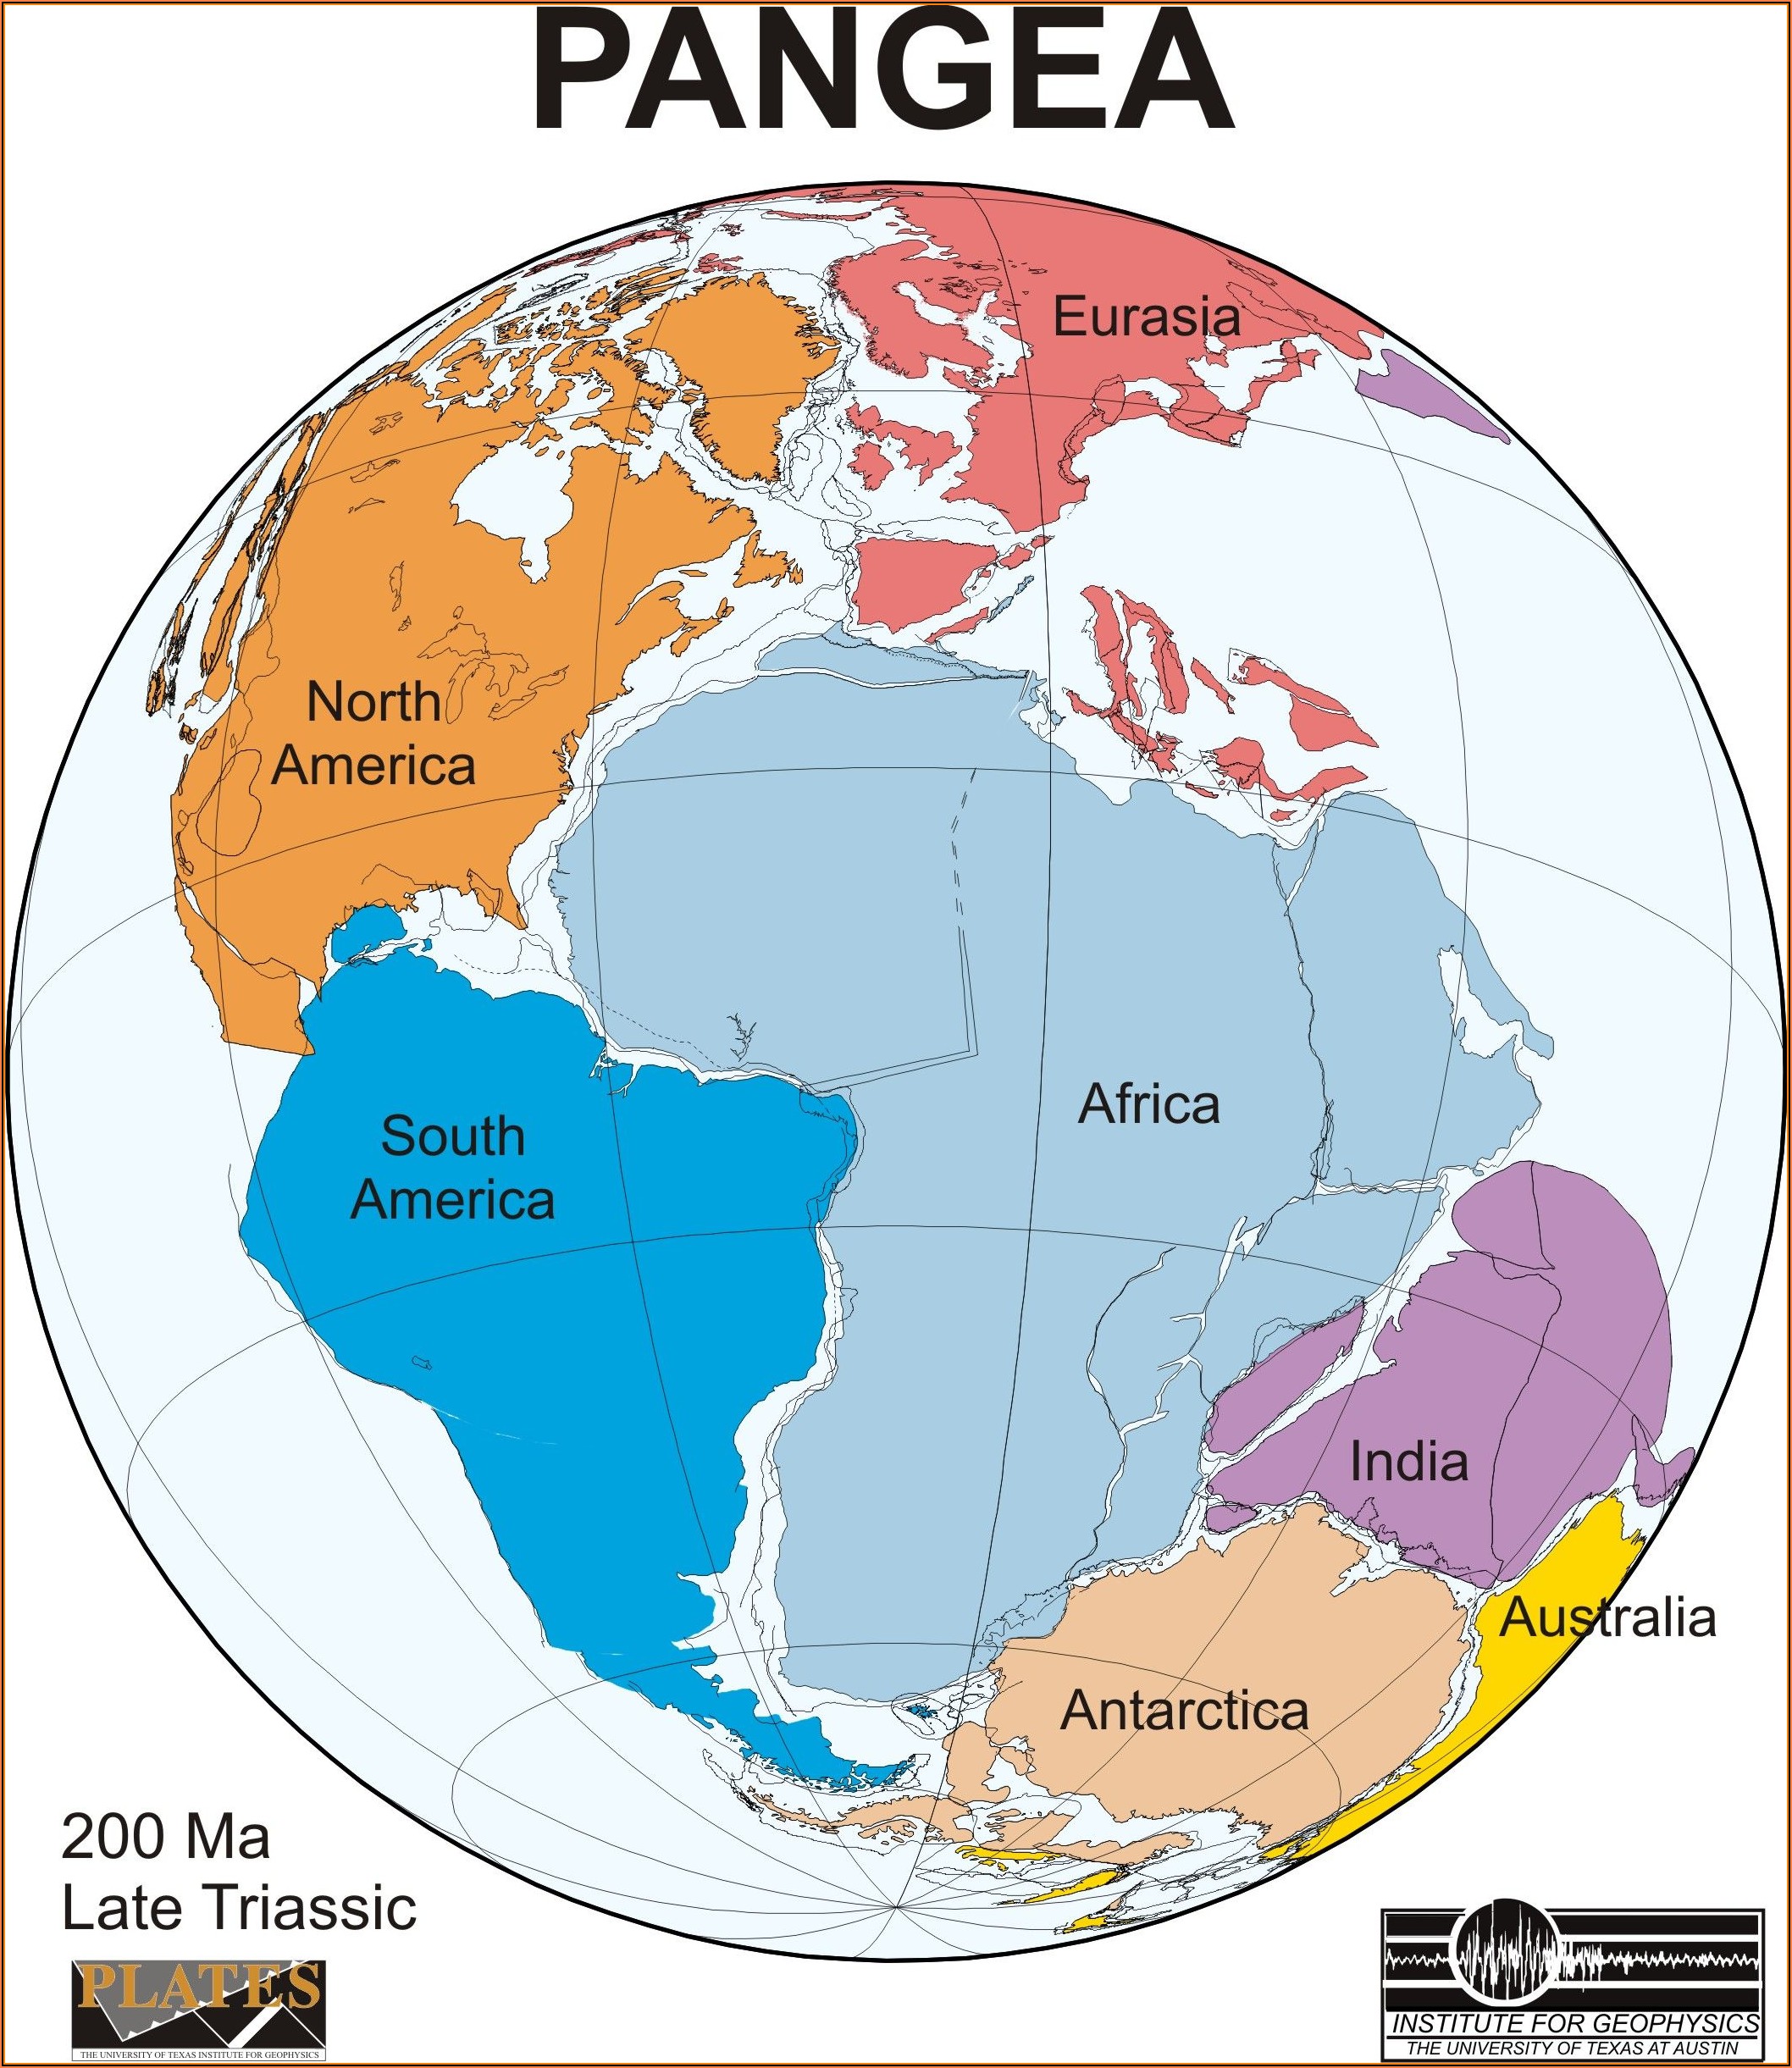 Compare Pangaea With World Map